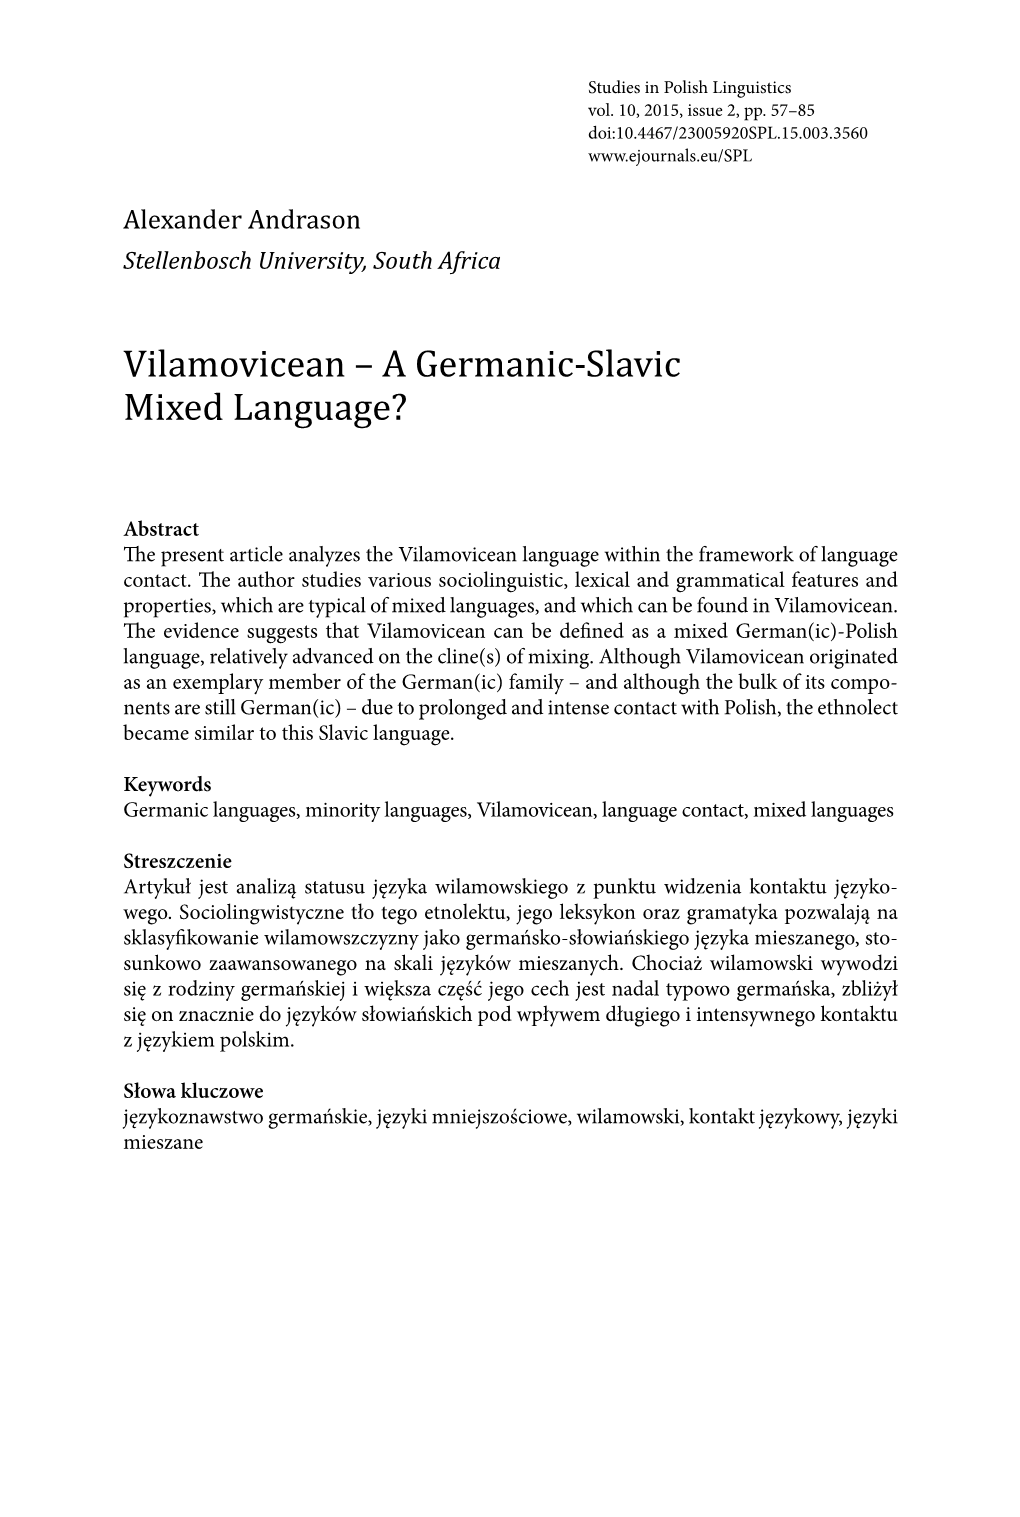 Vilamovicean – a Germanic-Slavic Mixed Language?